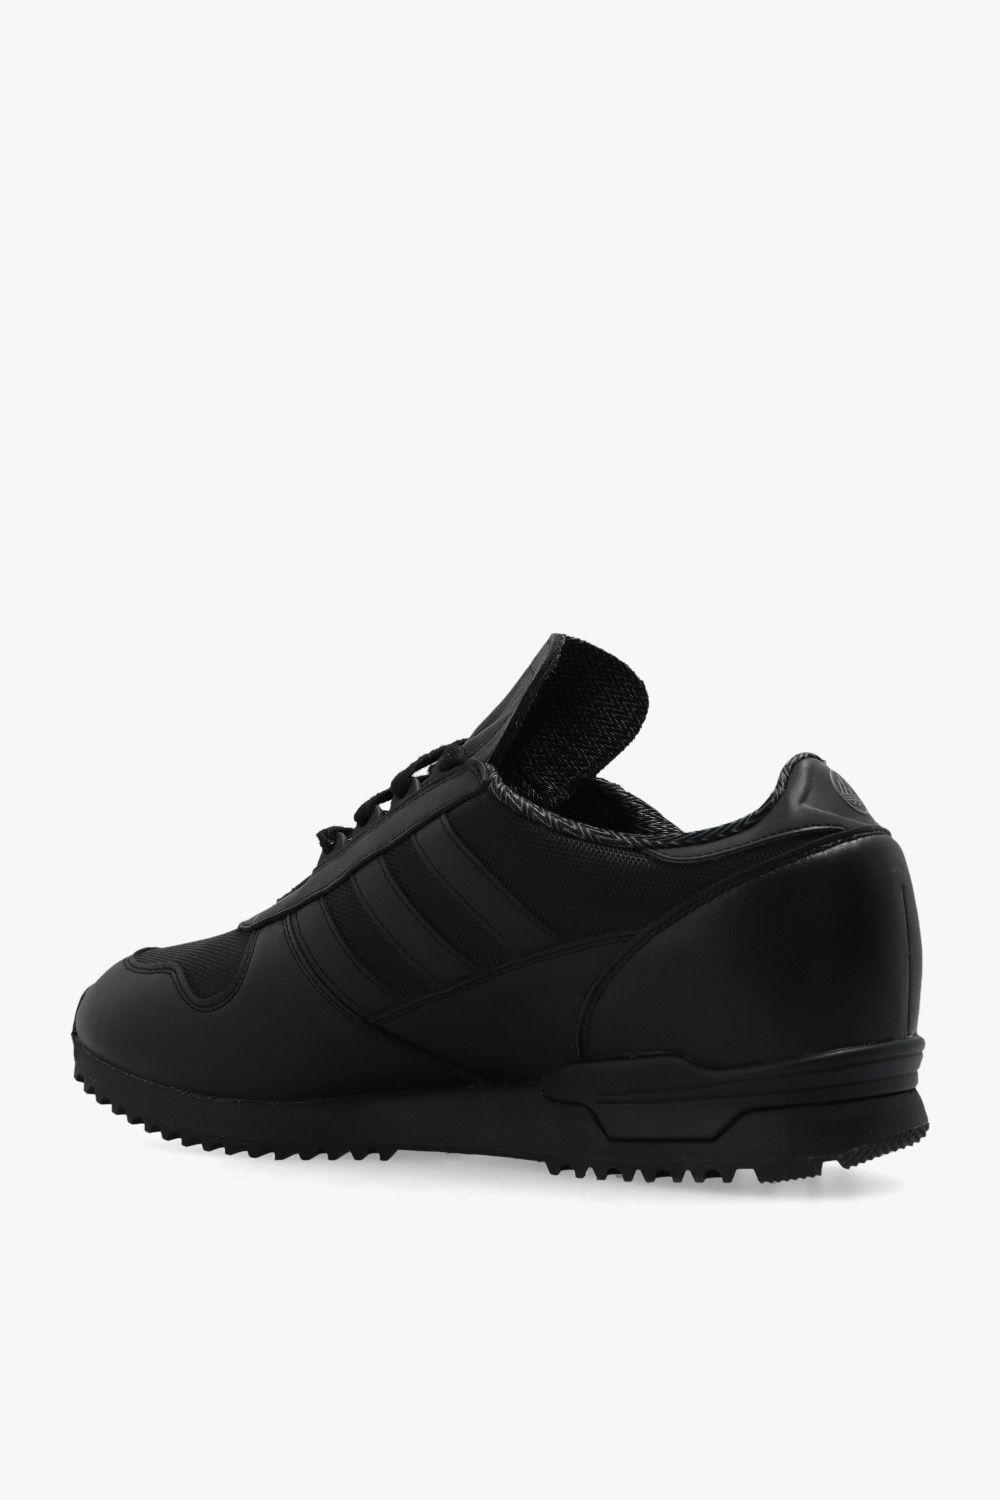 adidas Originals 'hartness Spzl' Sneakers in Black for Men | Lyst